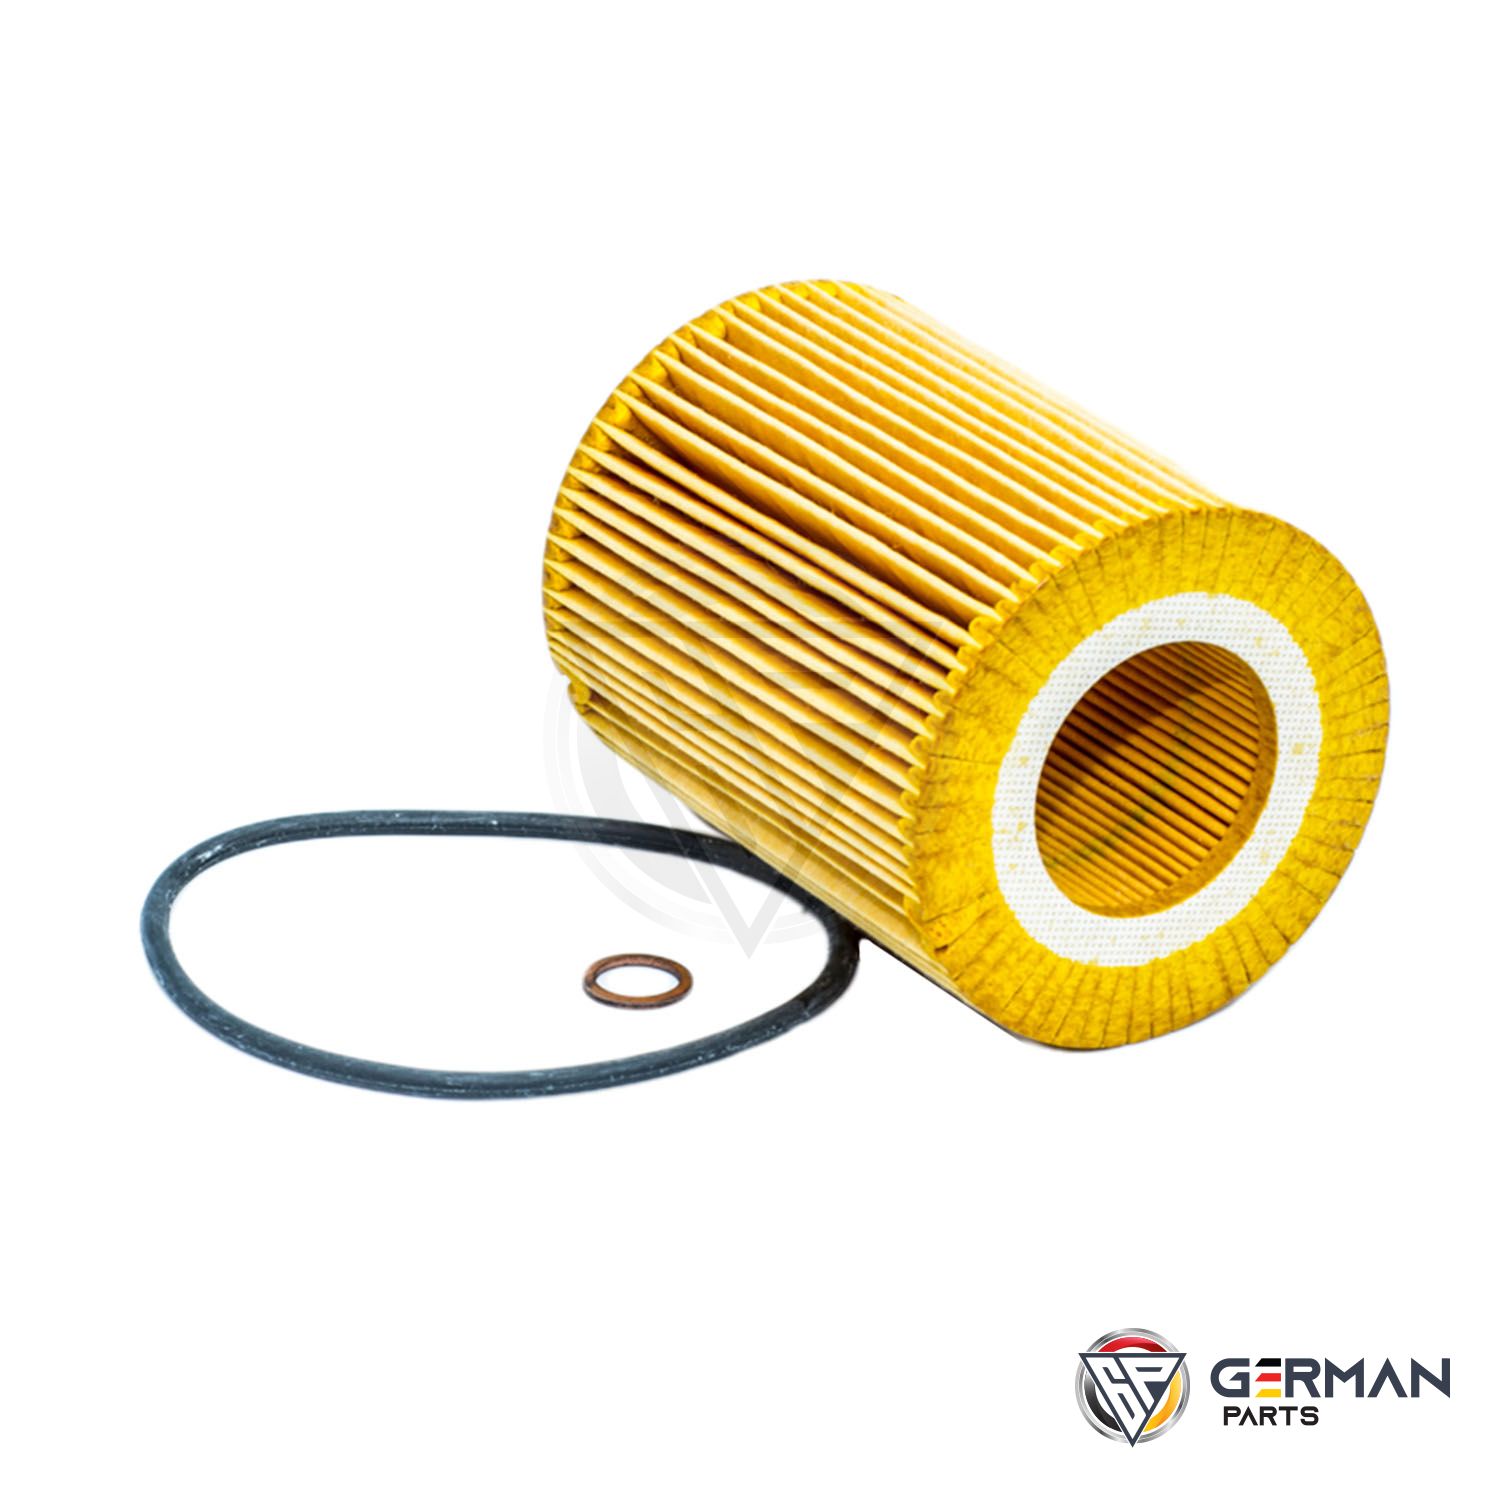 Buy BMW Oil Filter 11427512300 - German Parts